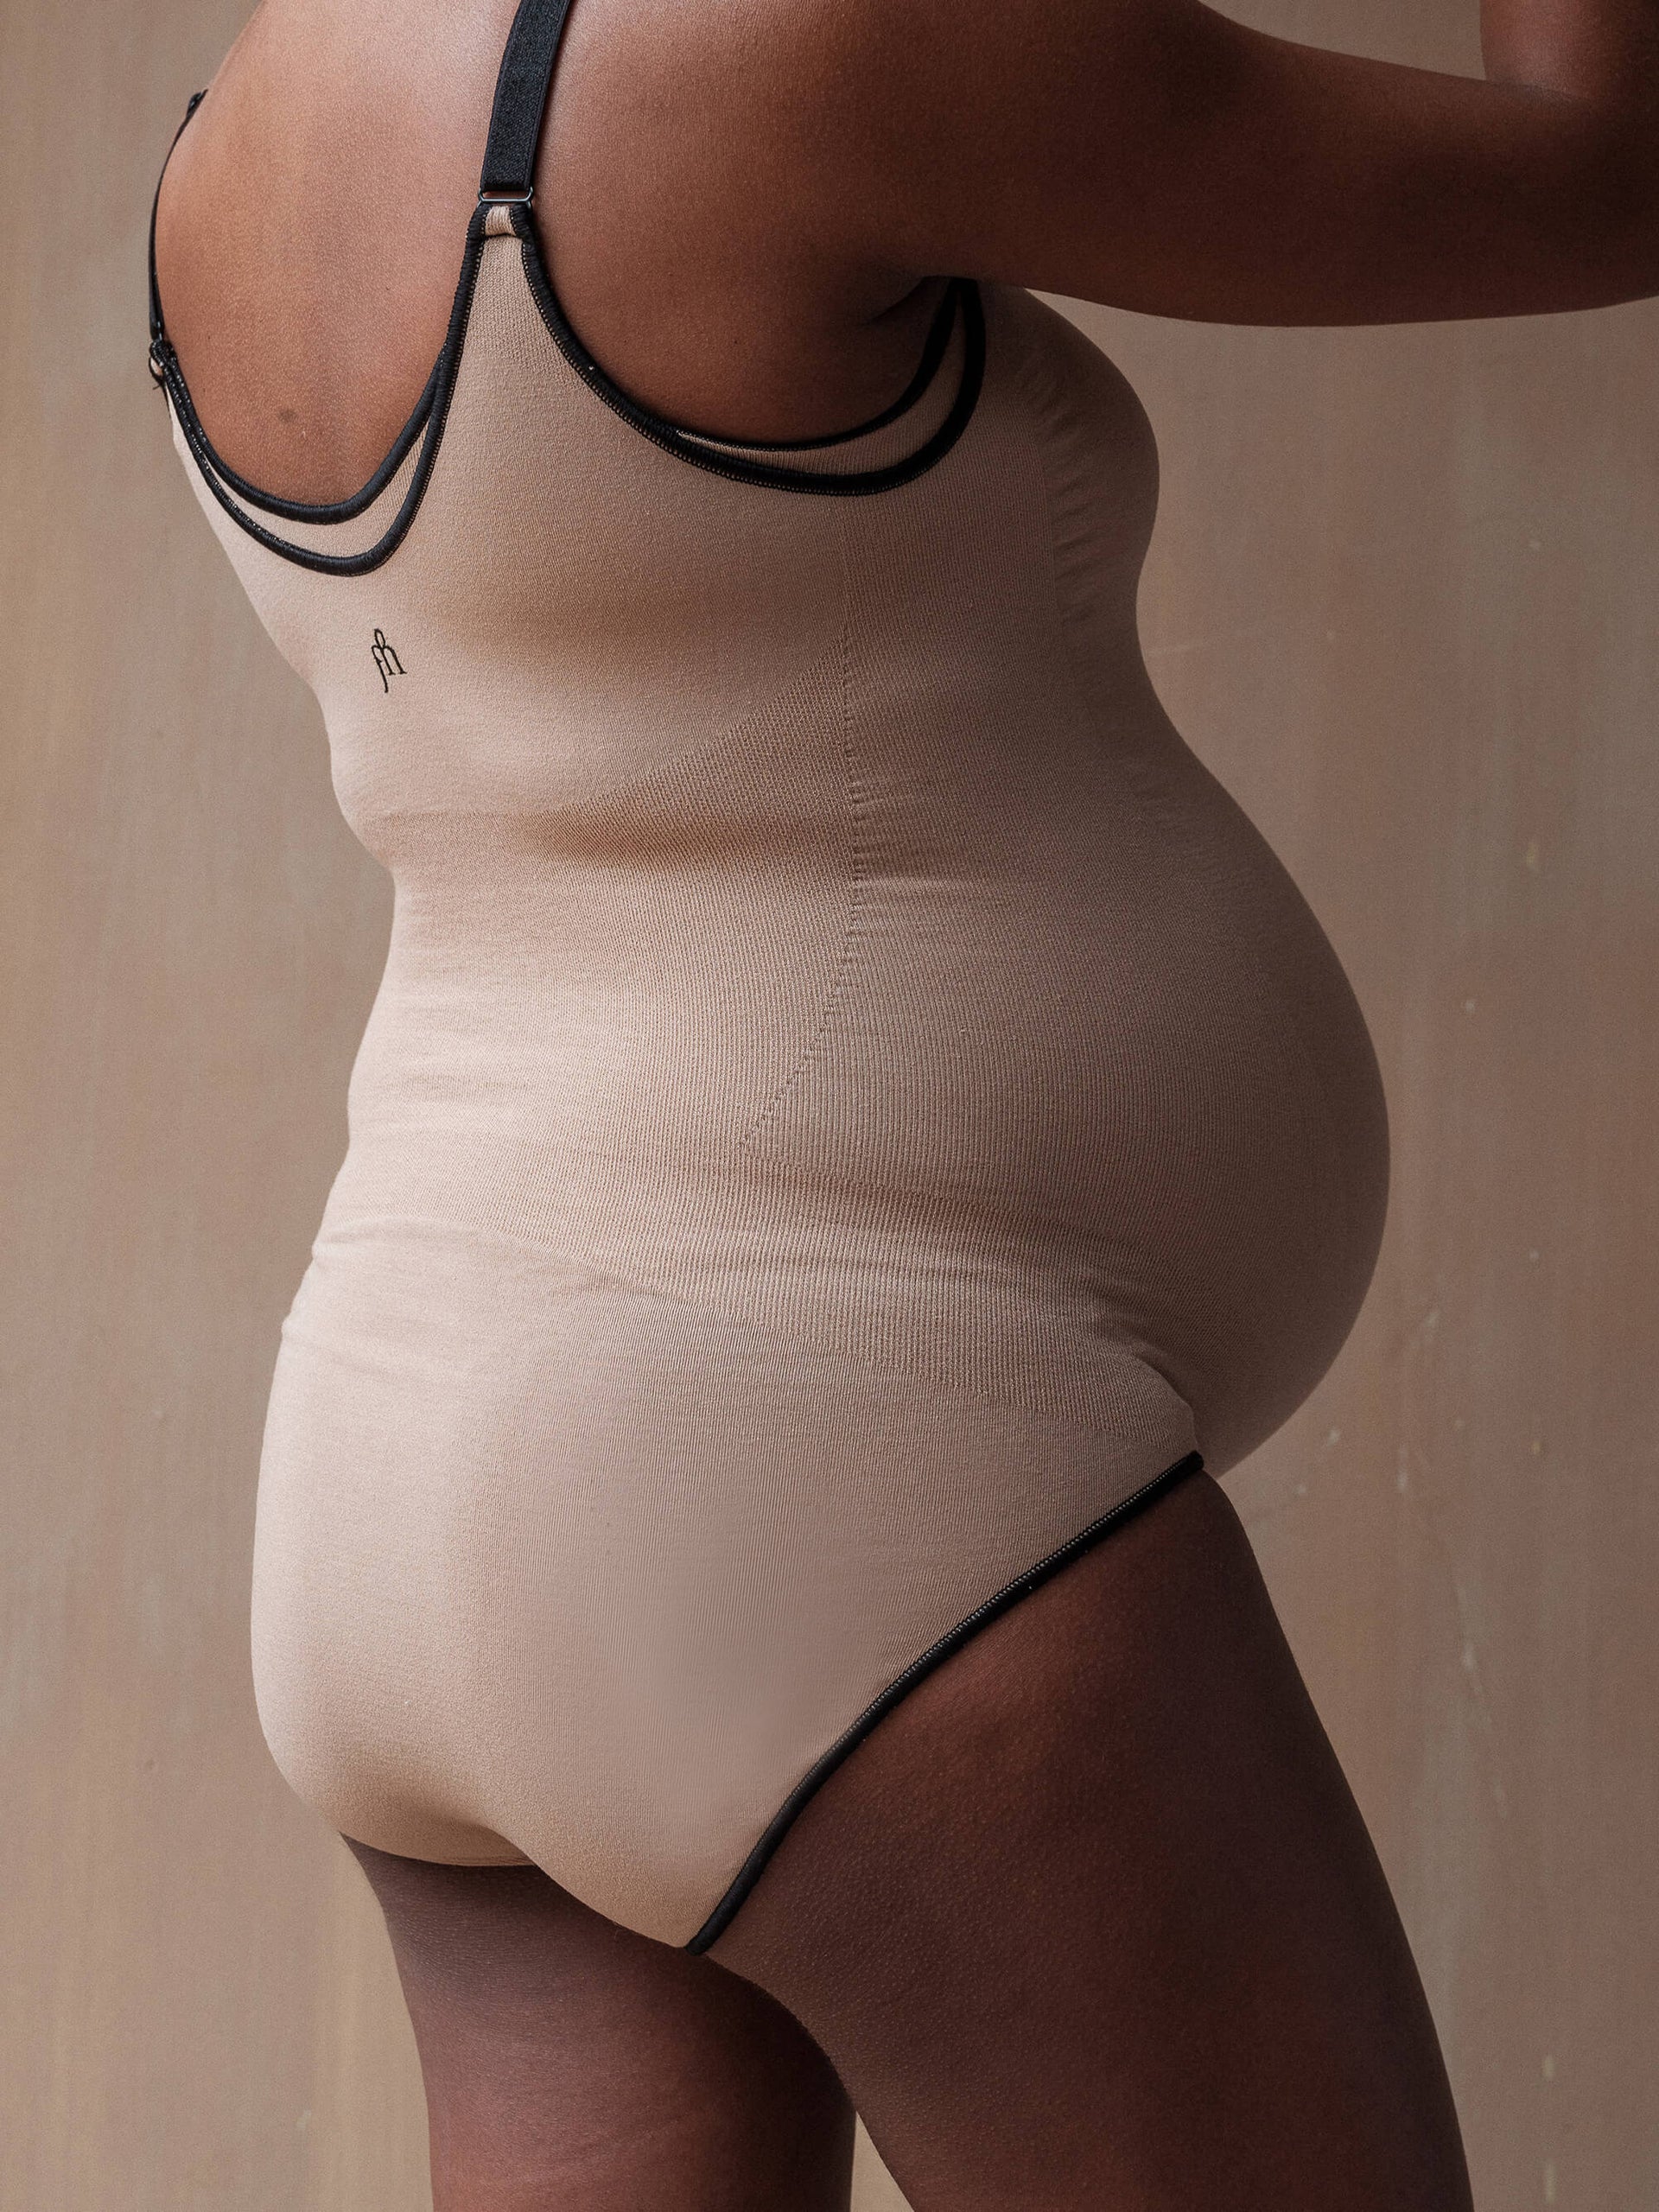 Jorgen House Sand colour maternity bodysuit on pregnant female body